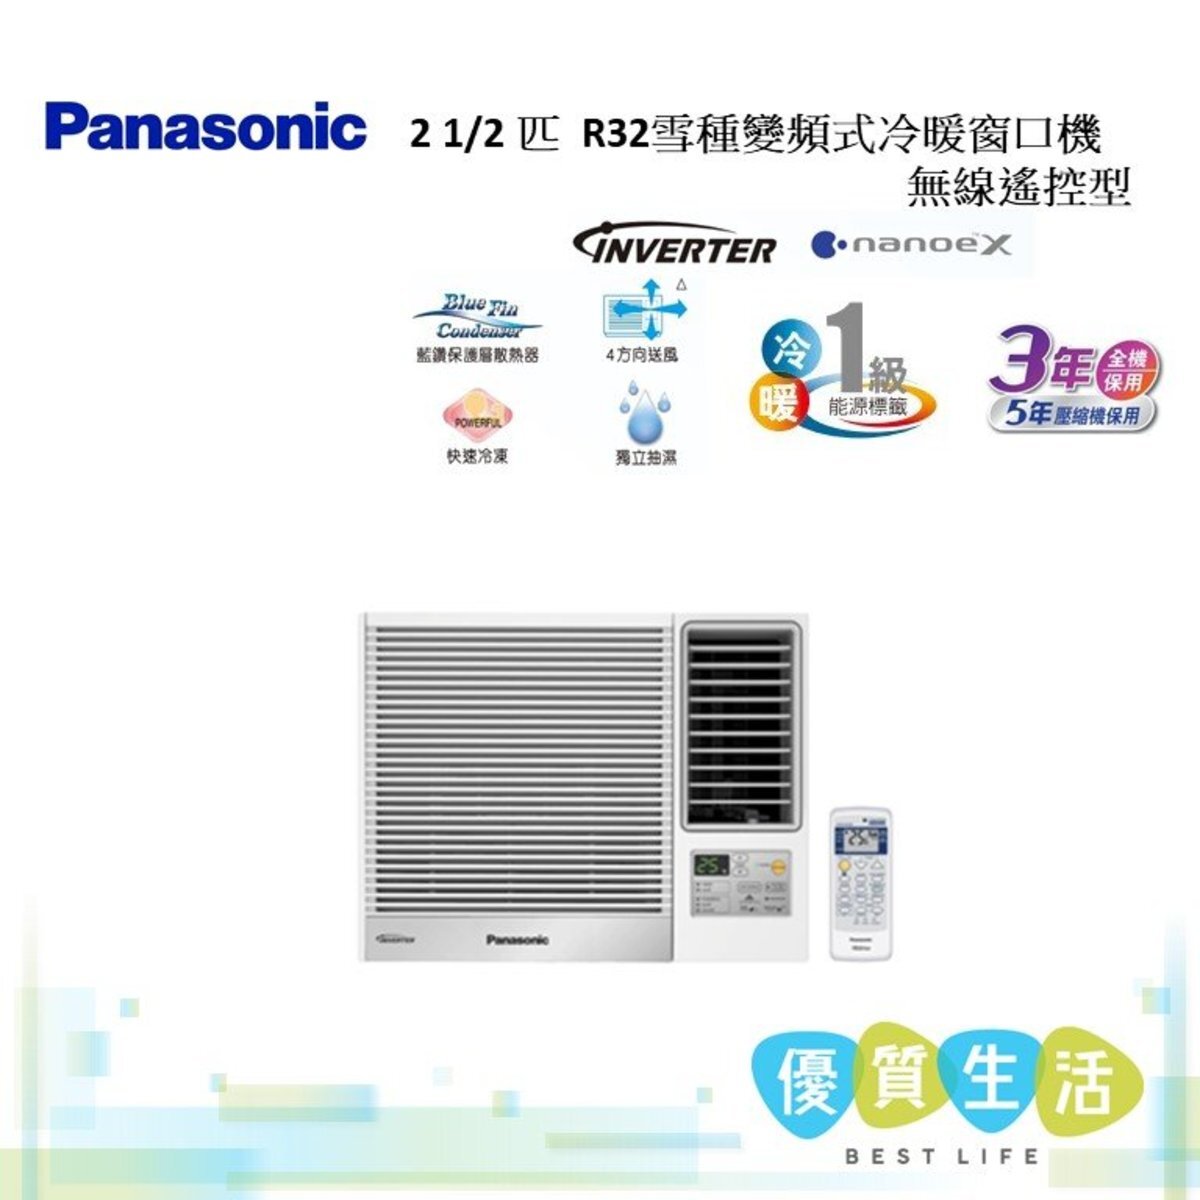 CW-HZ240ZA R32雪種變頻式冷暖窗口機 (2 1/2 匹 (無線遙控型))